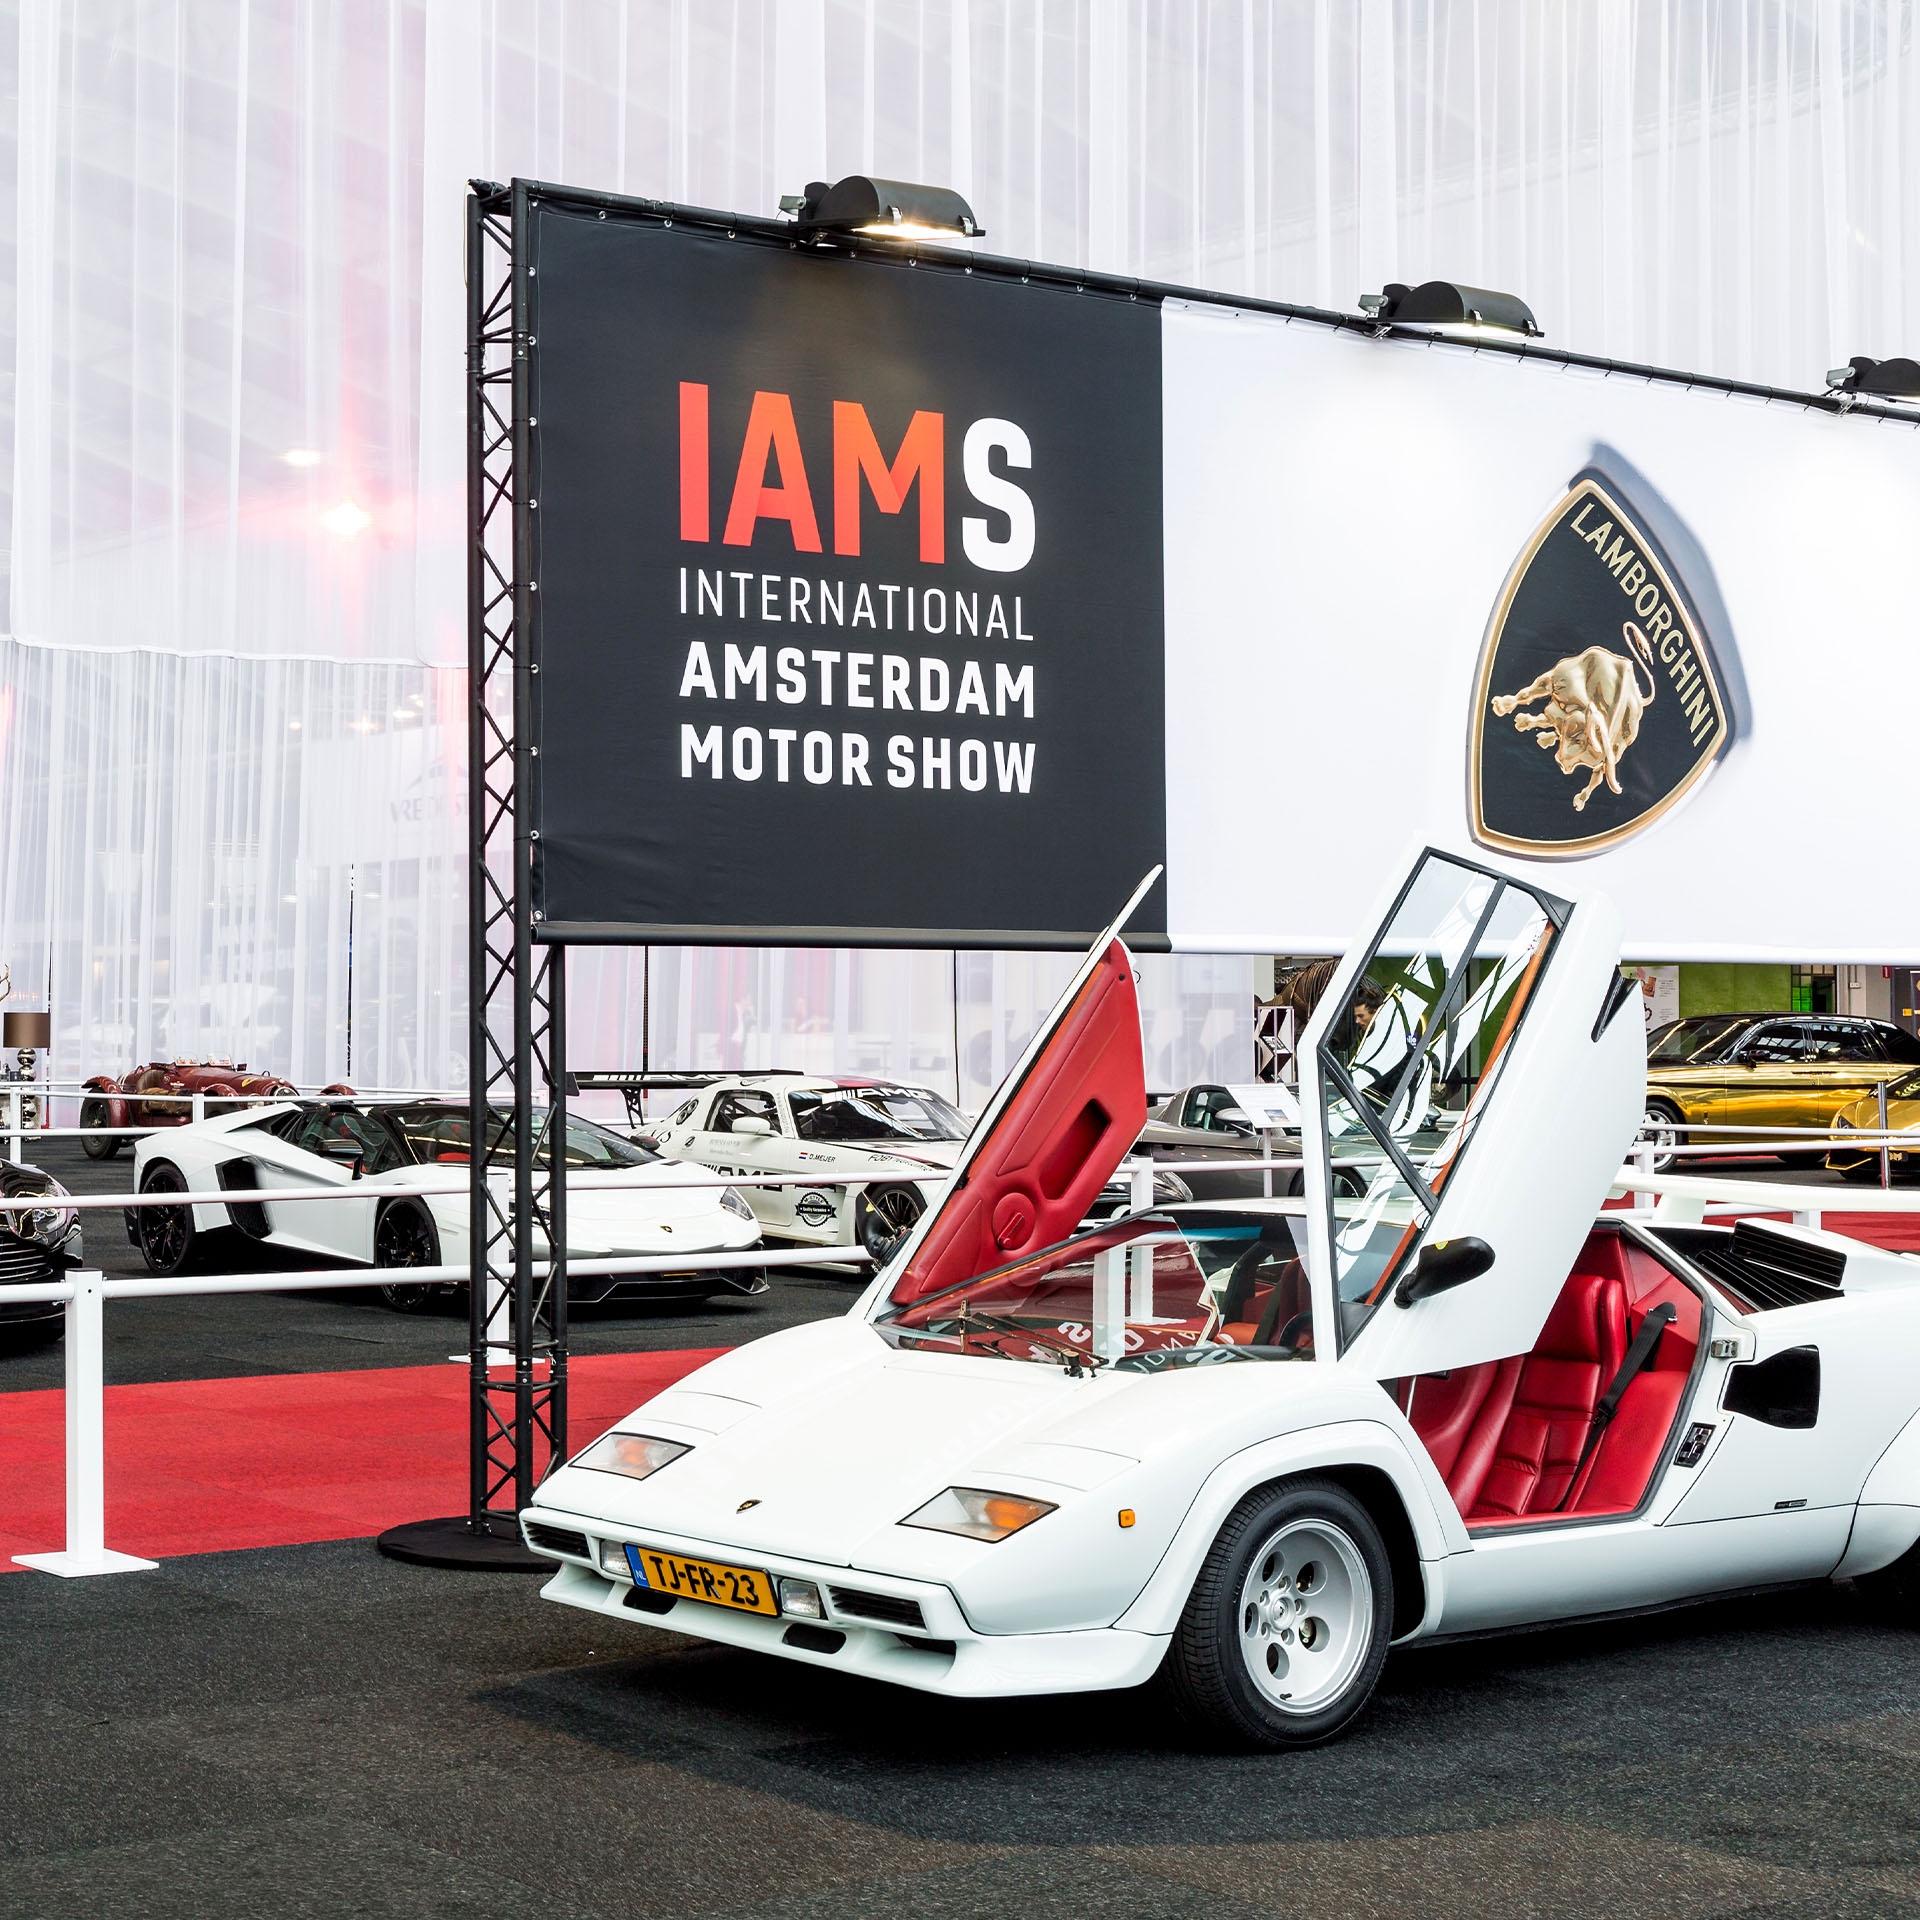 International Amsterdam Motor Show (IAMS)